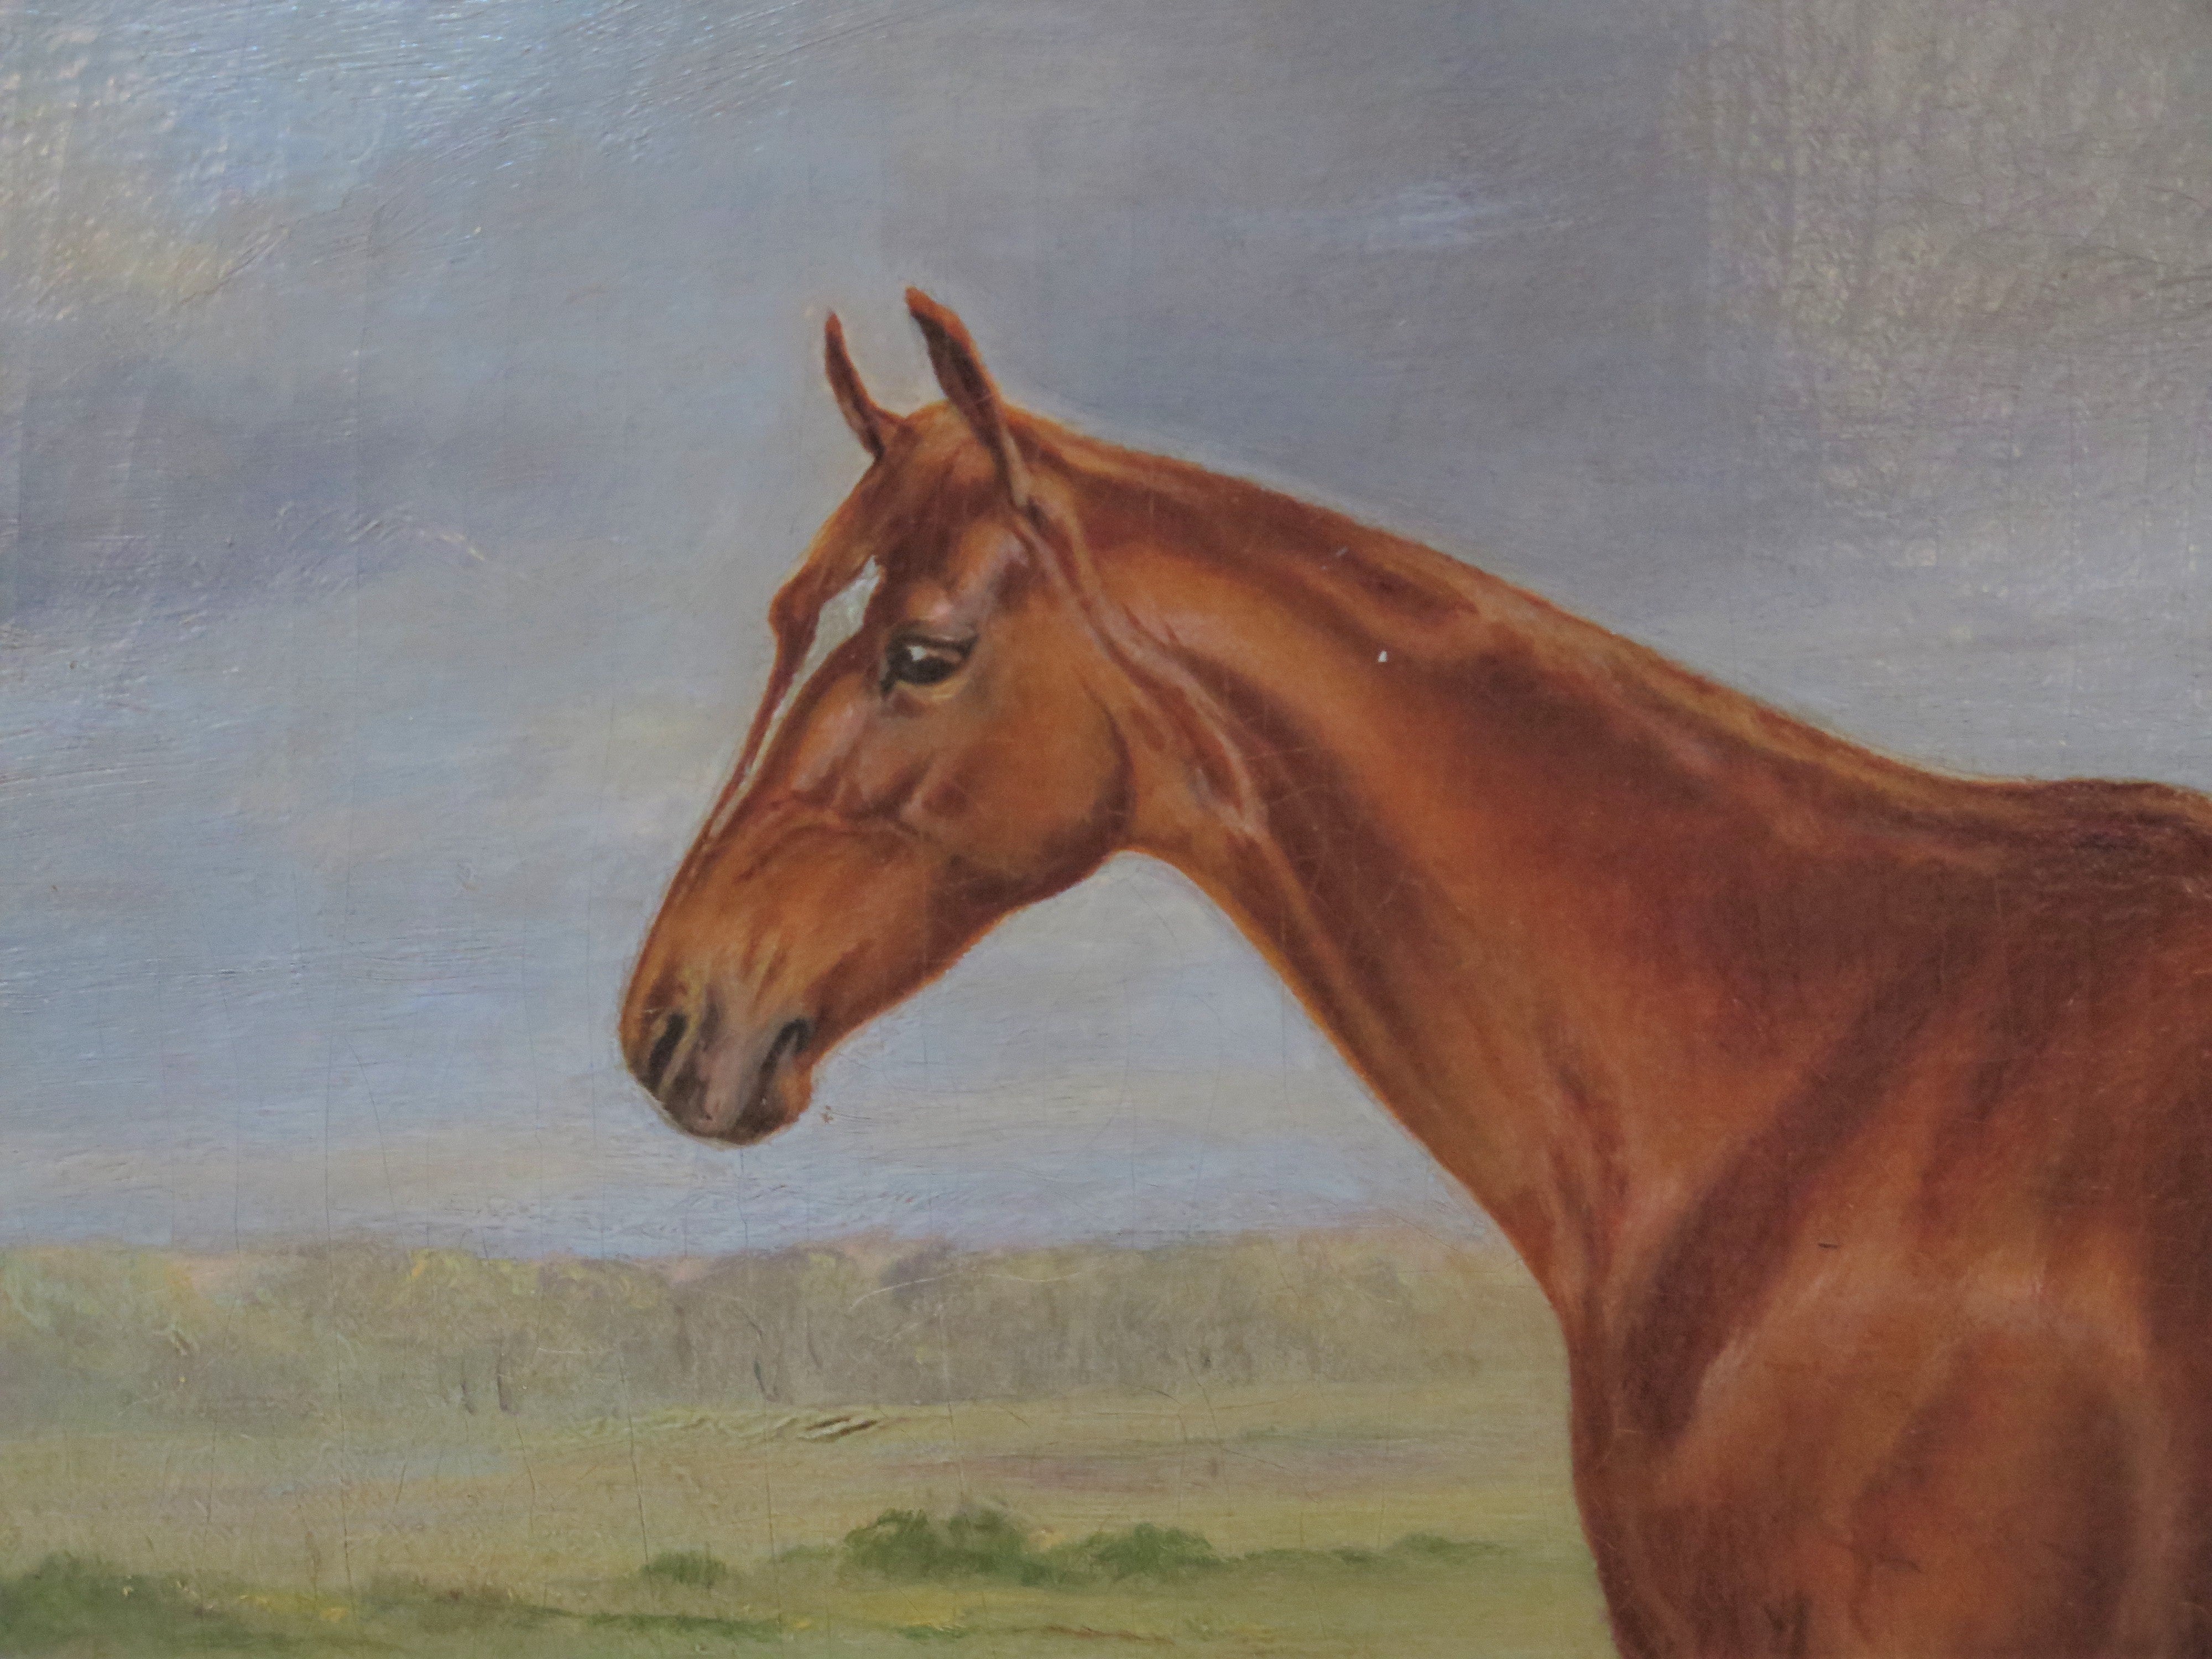 Sporting Picture / Horse Portrait by American Painter Thomas J. Scott (1824-1888)